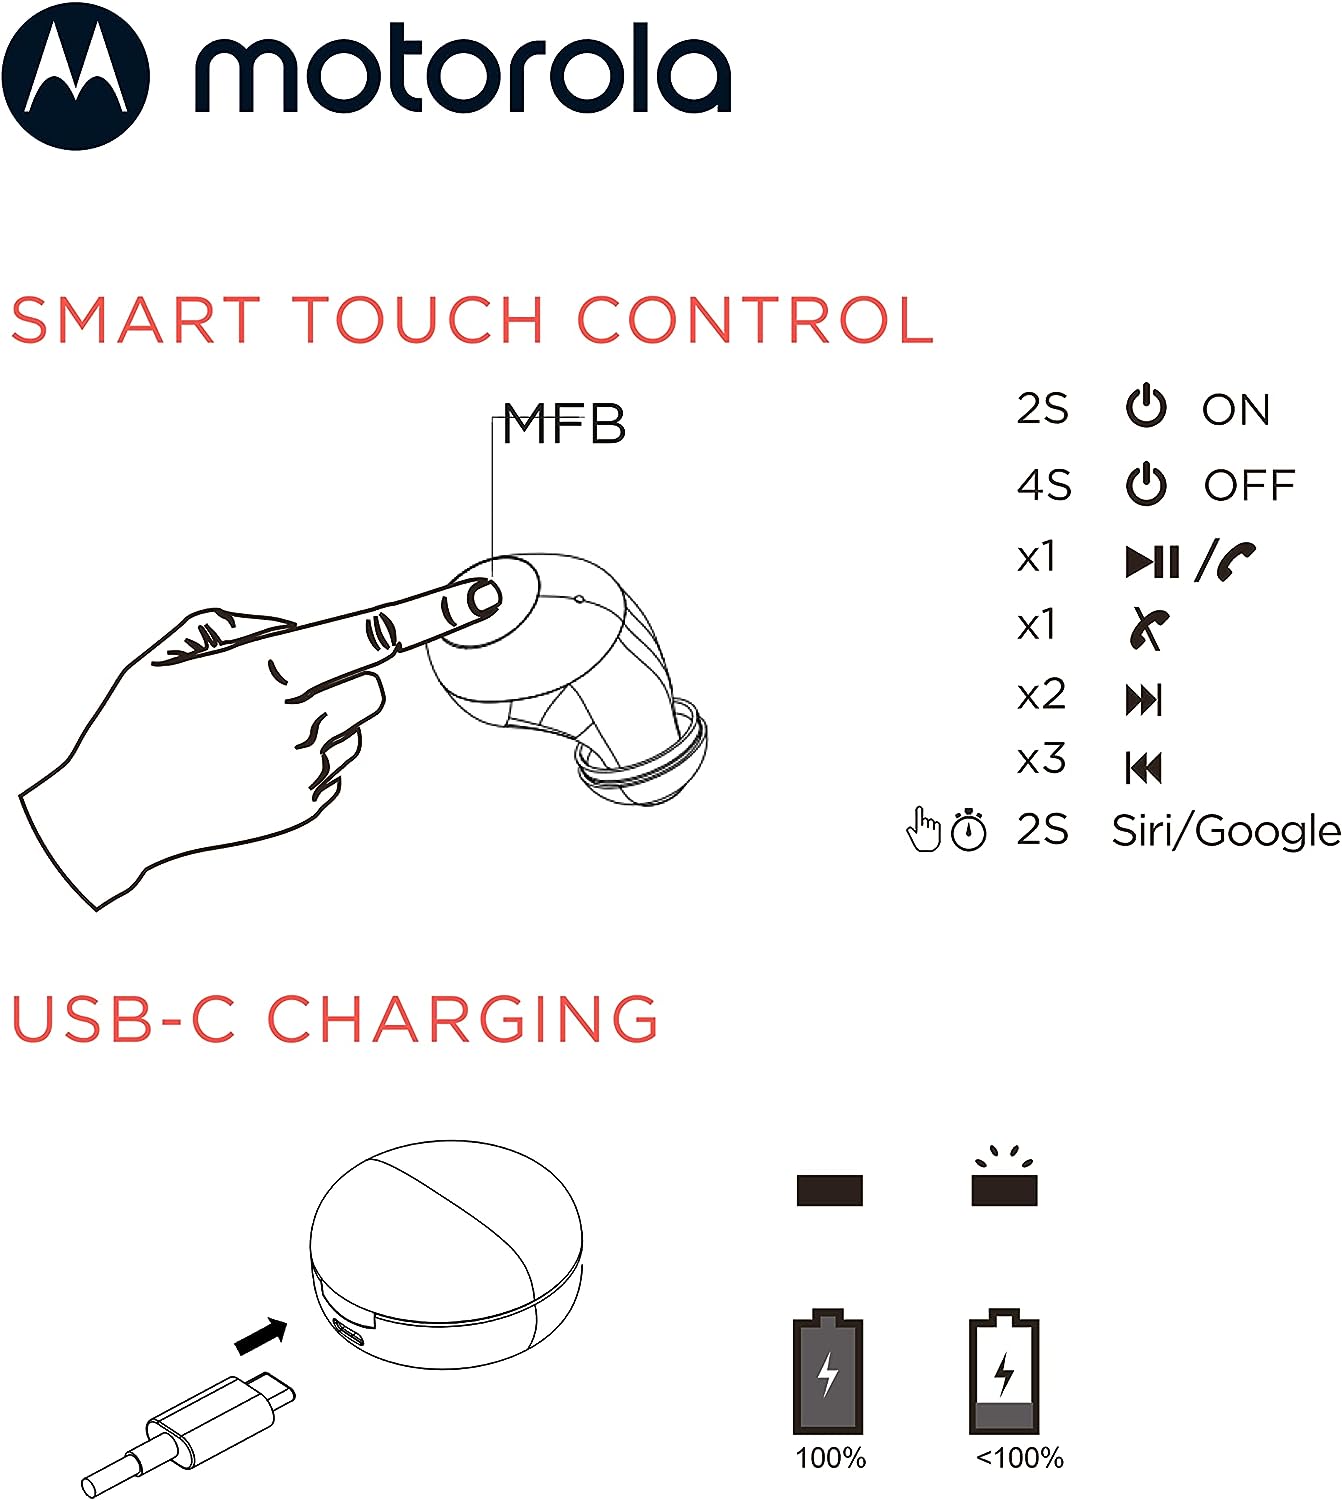 Motorola Moto Buds 150 True Wireless Earbuds IPX5 Water Excellent Design, Resistant & Lightweight - Black